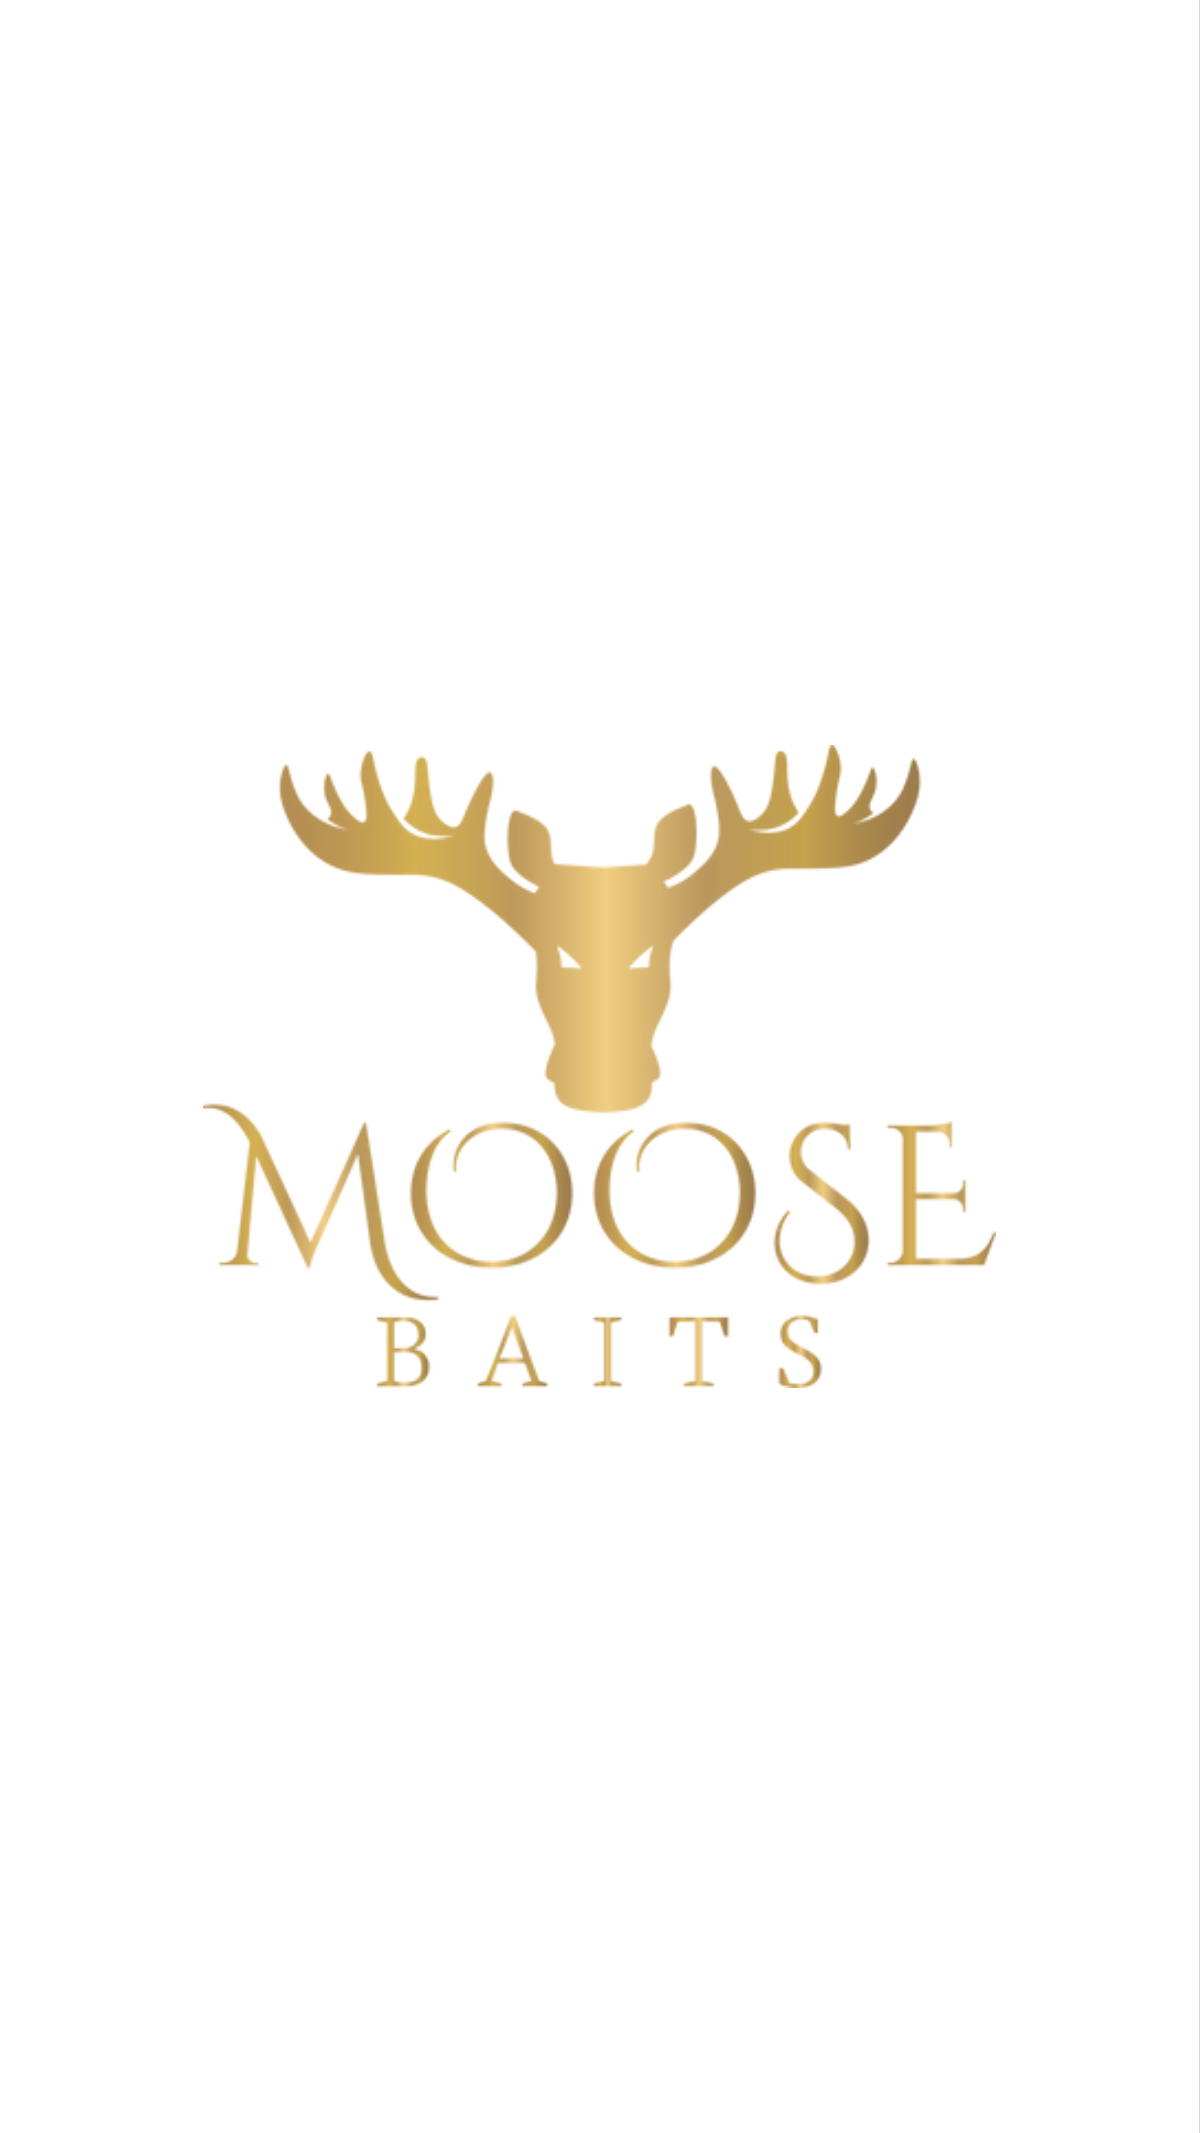 Hard Baits – Moose Baits